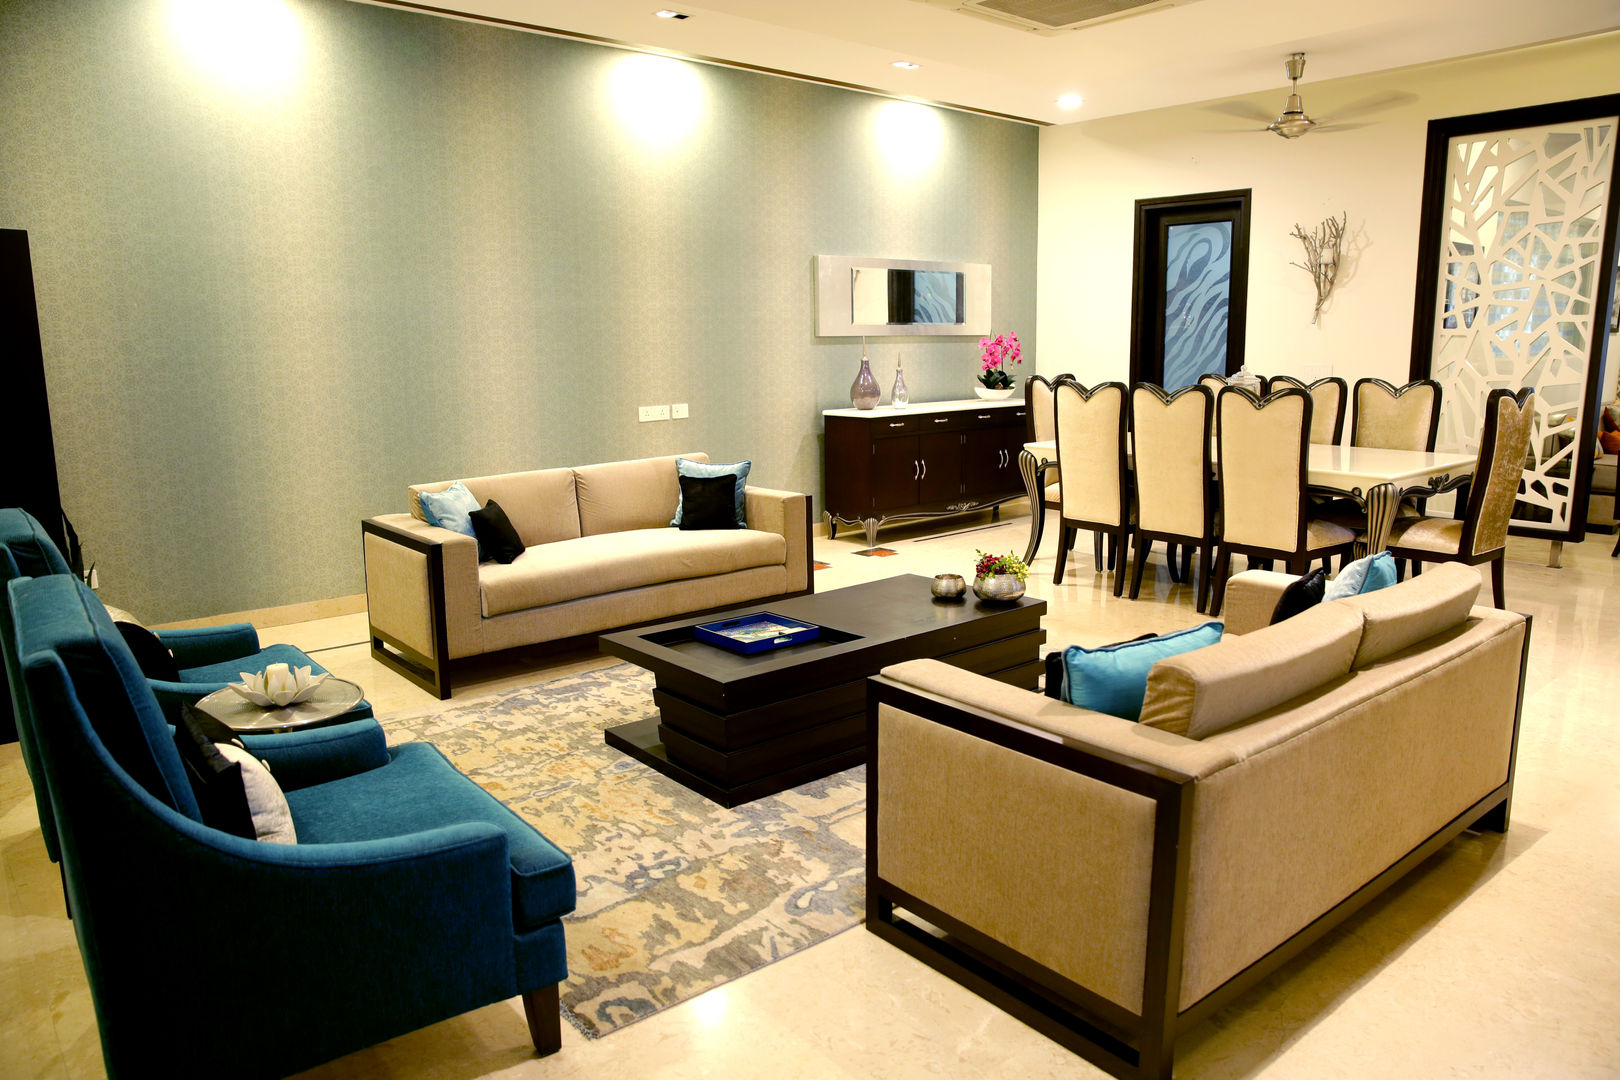 Residence, renu soni interior design renu soni interior design Ruang Keluarga Modern Sofas & armchairs